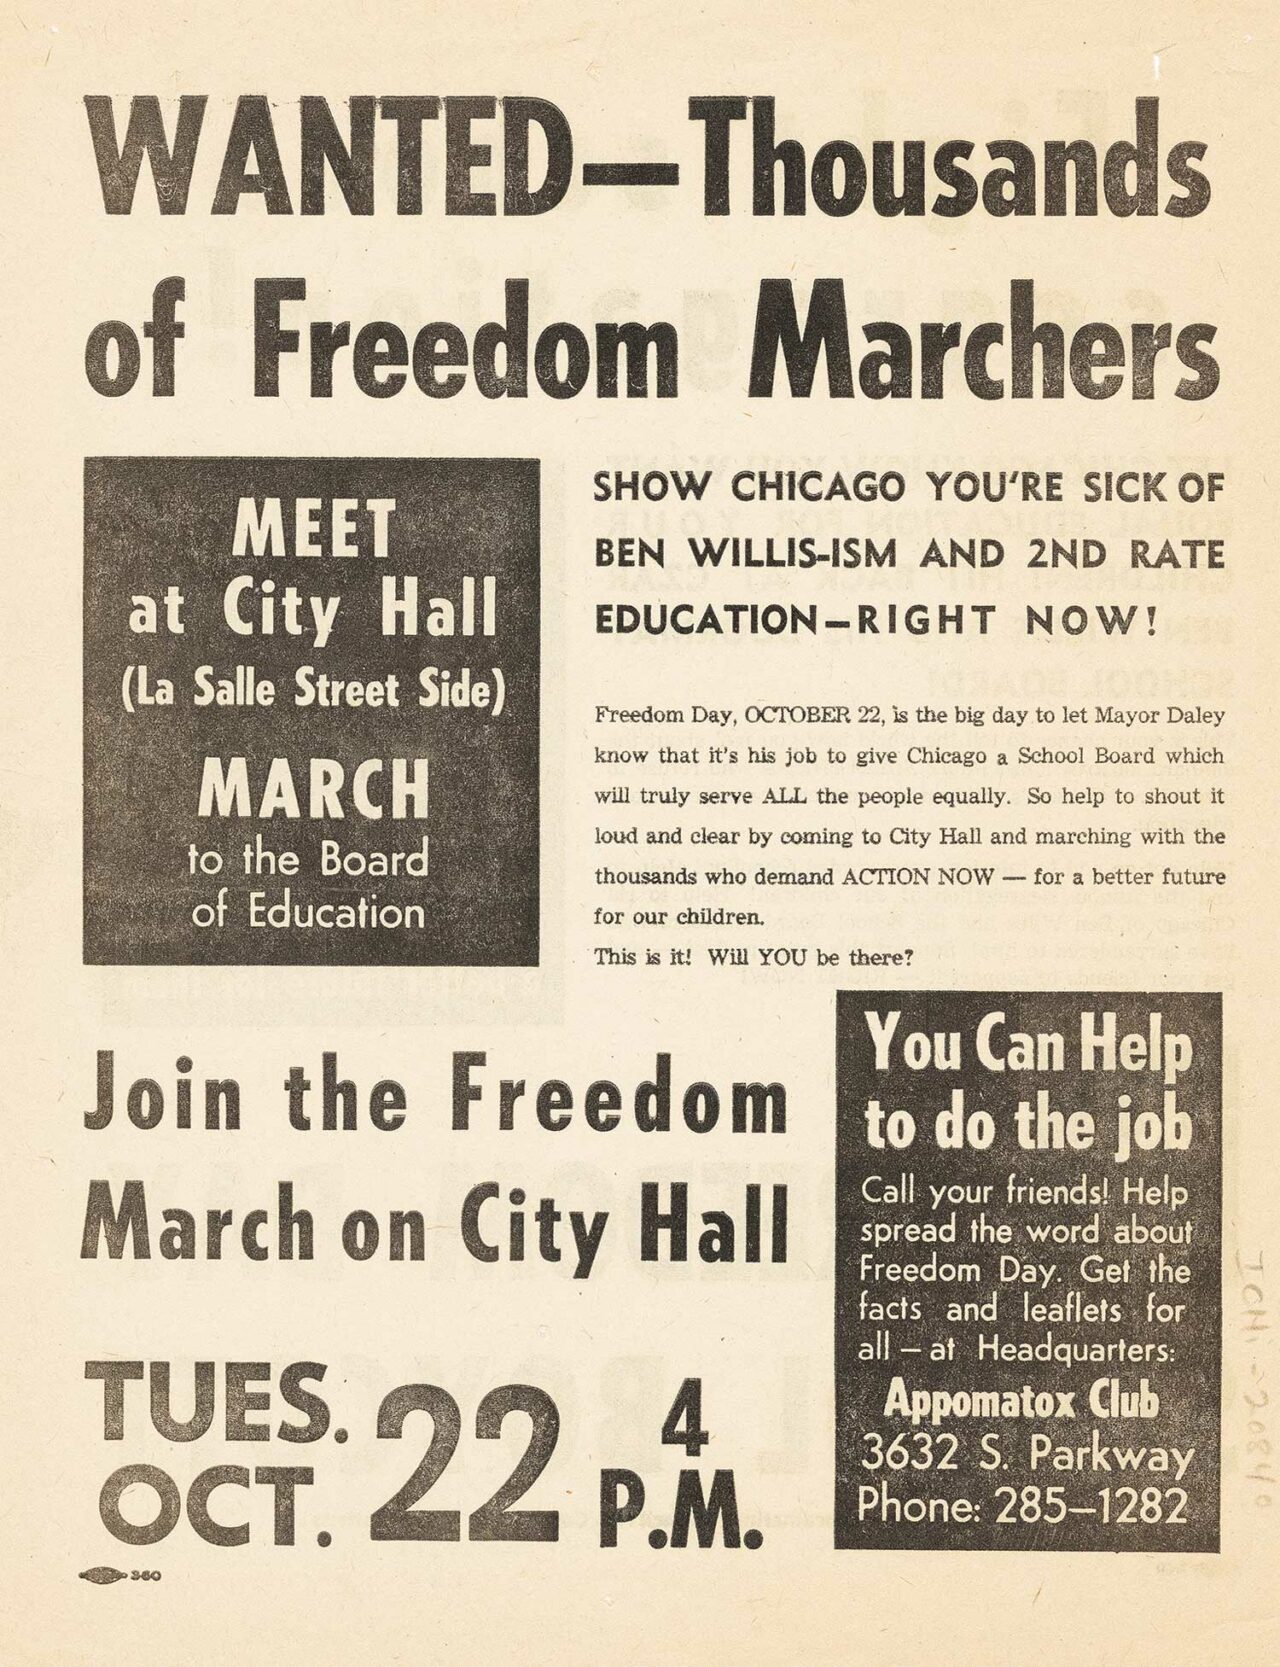 Exhibition-Facing Freedom-school march-i020840